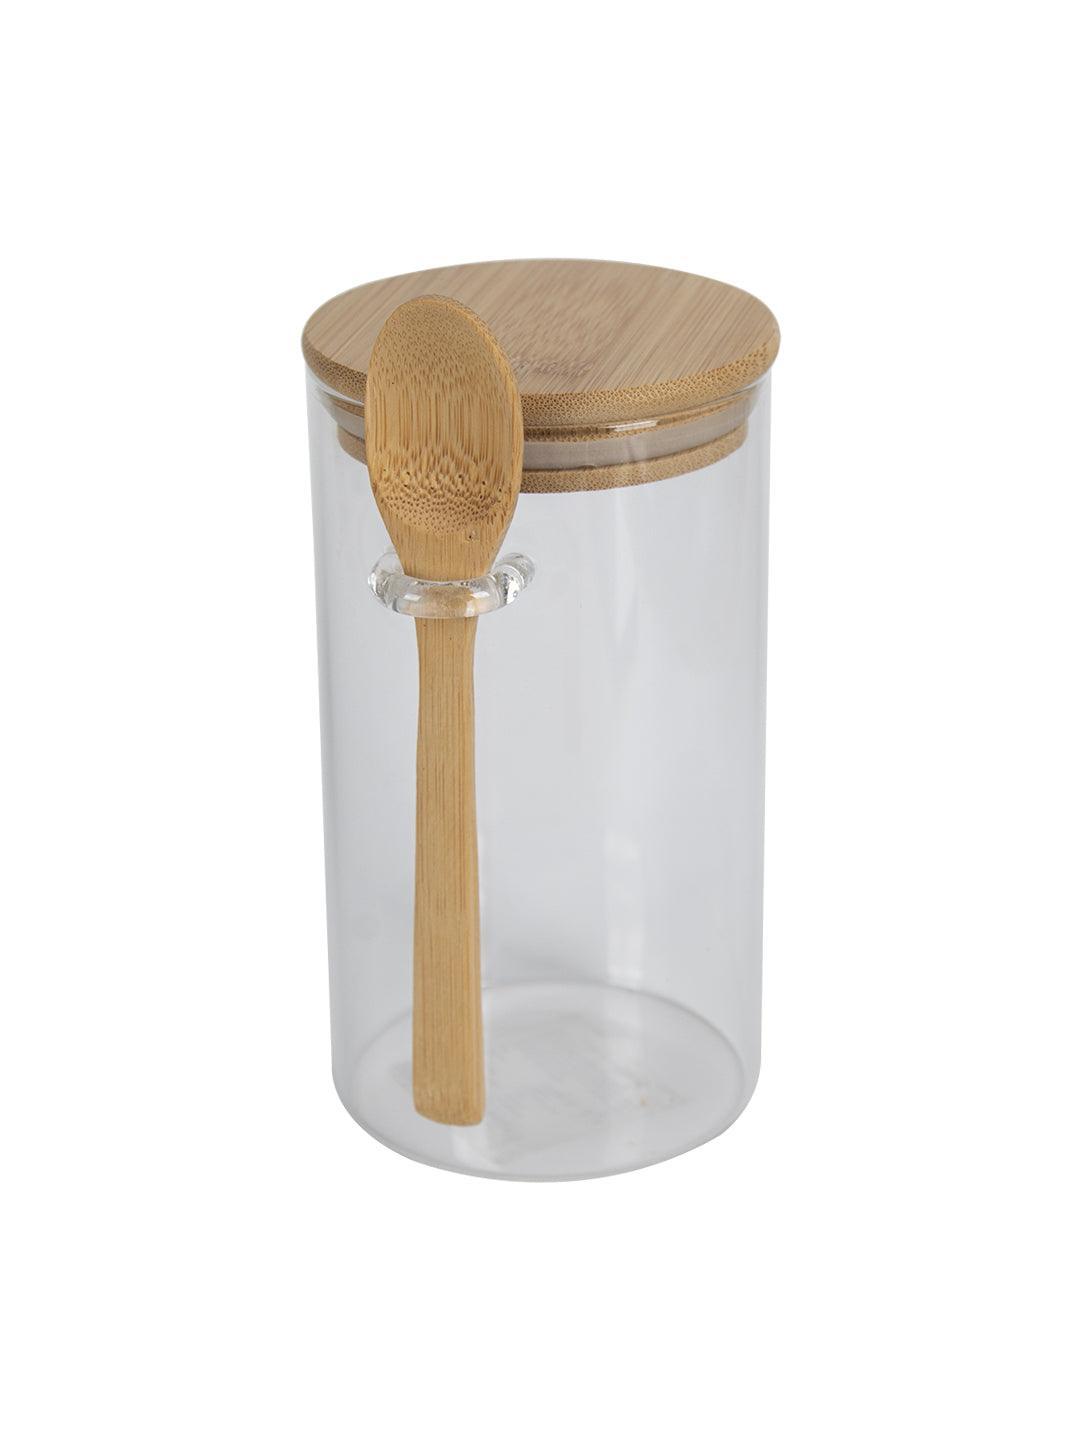  Mymanjerfu Glass Jar with Lid and Spoon, 12 oz 2 Pack